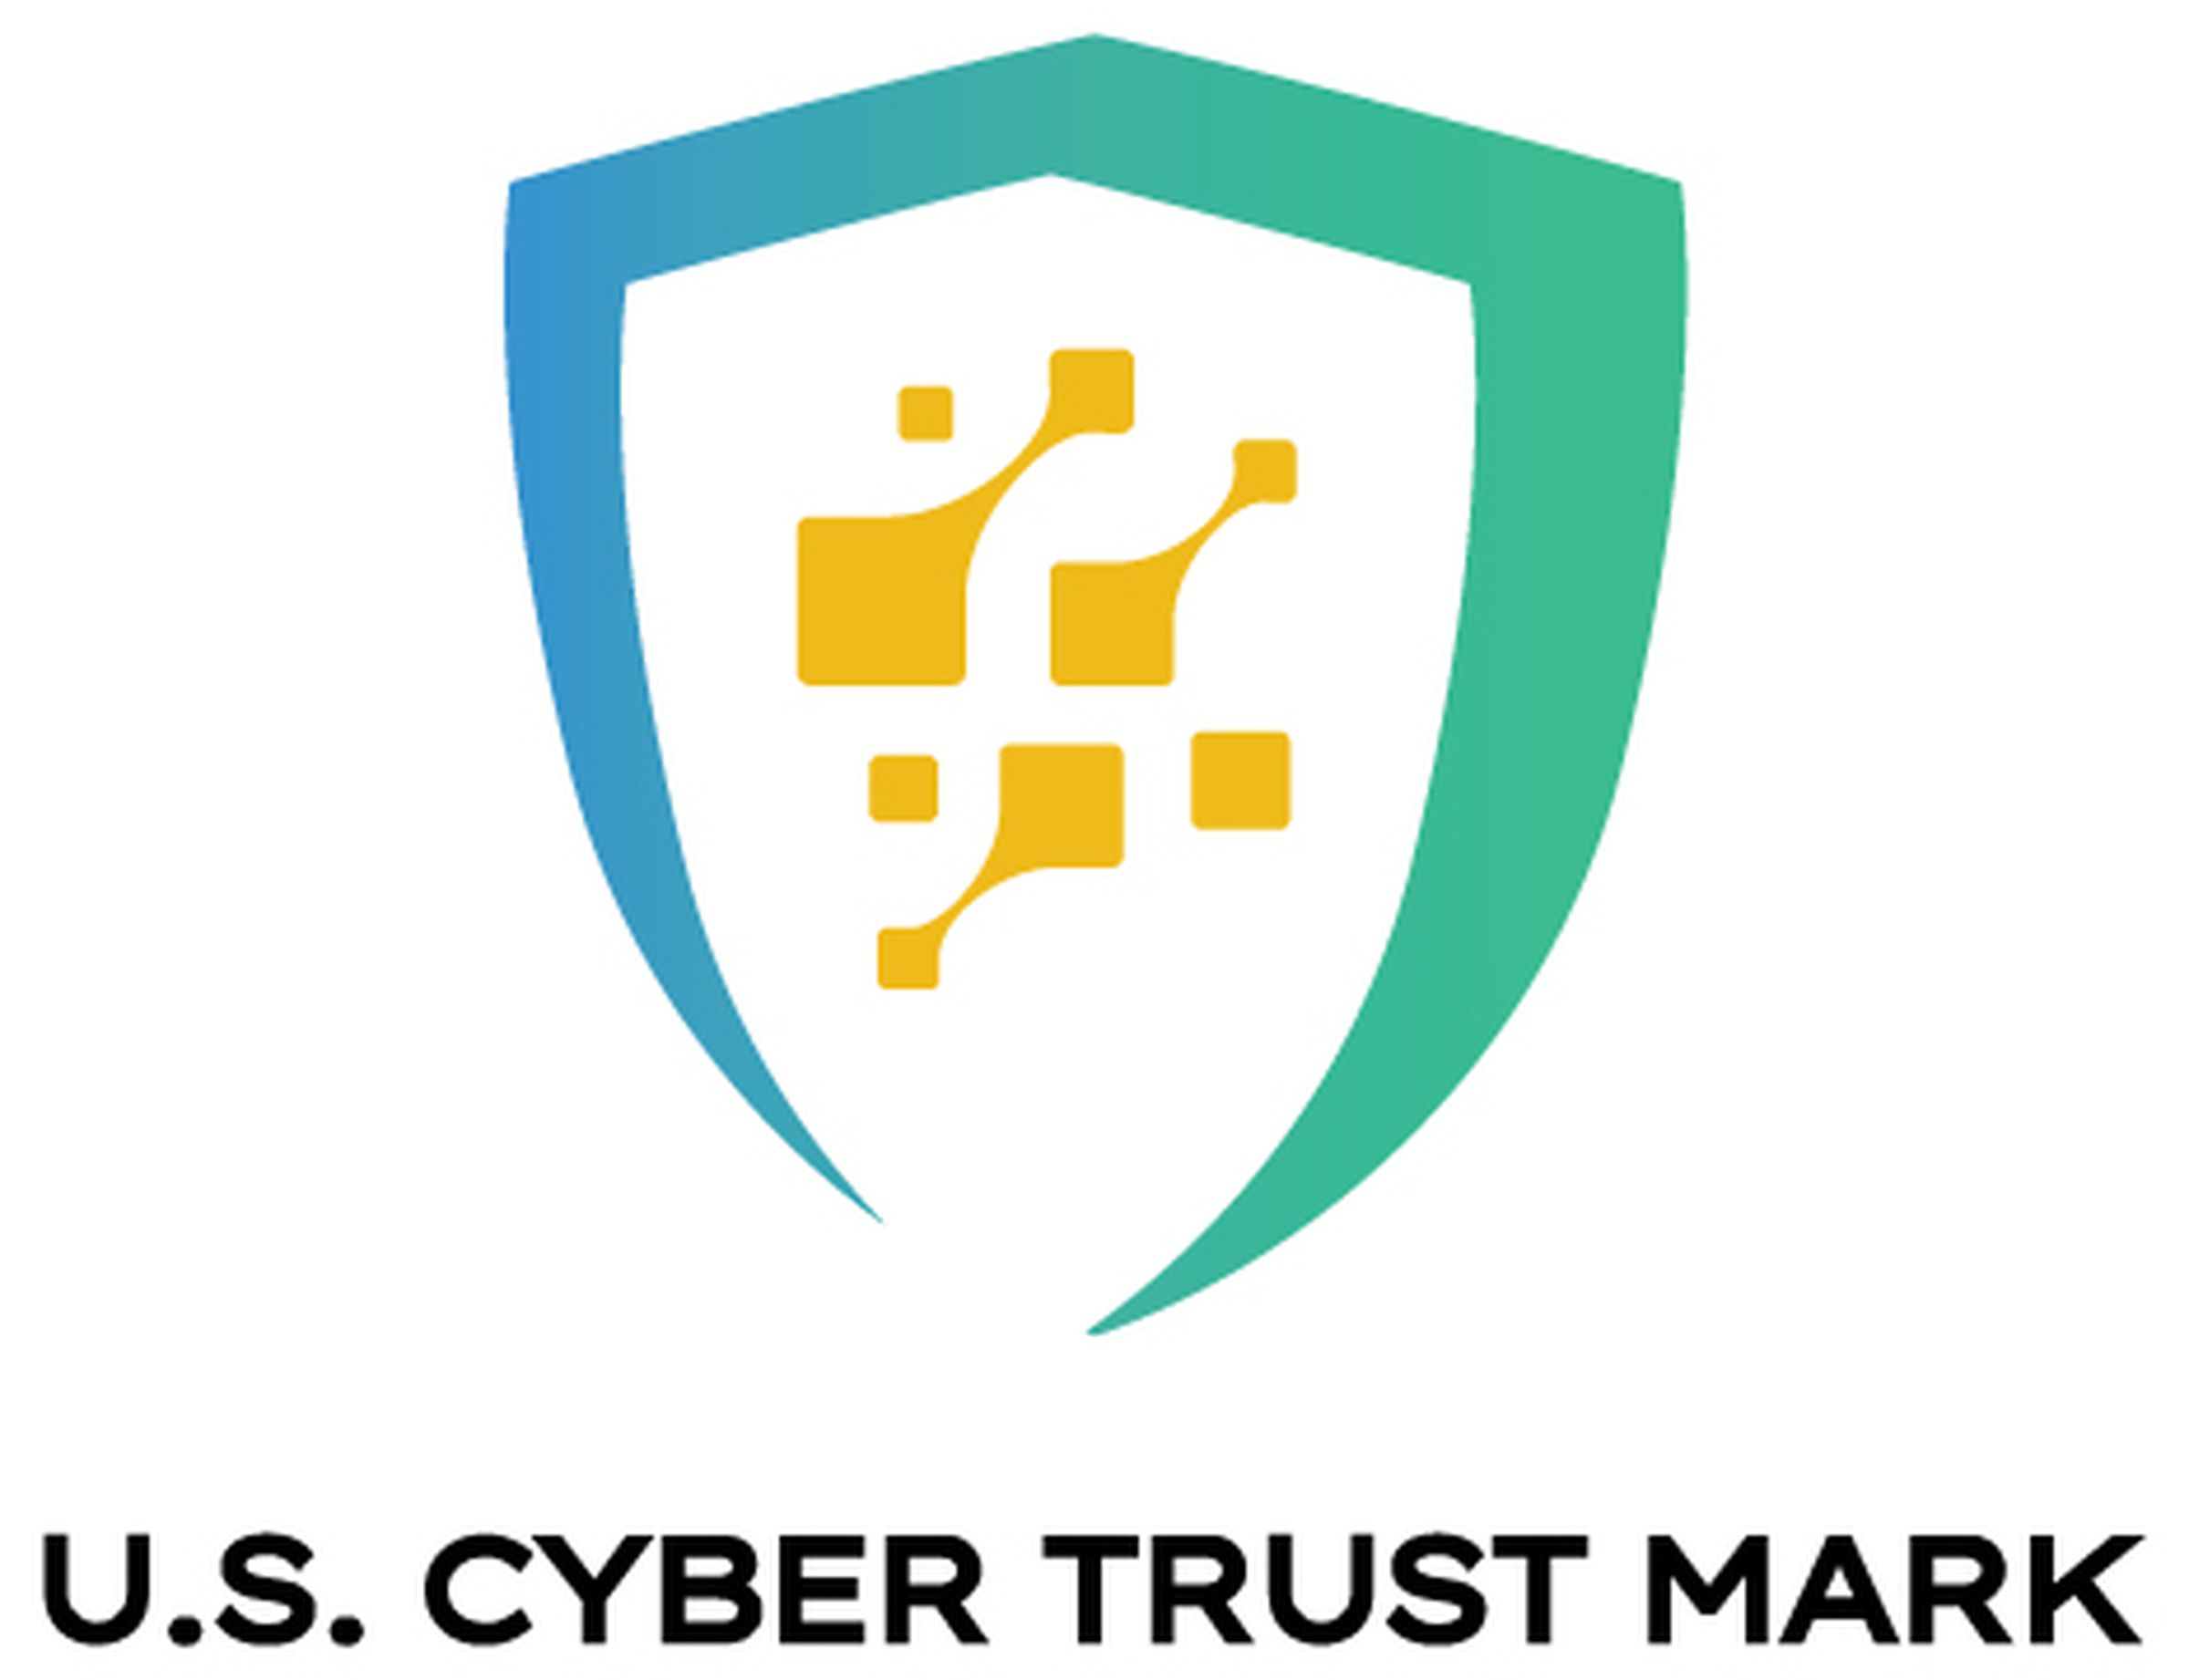 Proposed U.S. Cyber Trust Mark logo